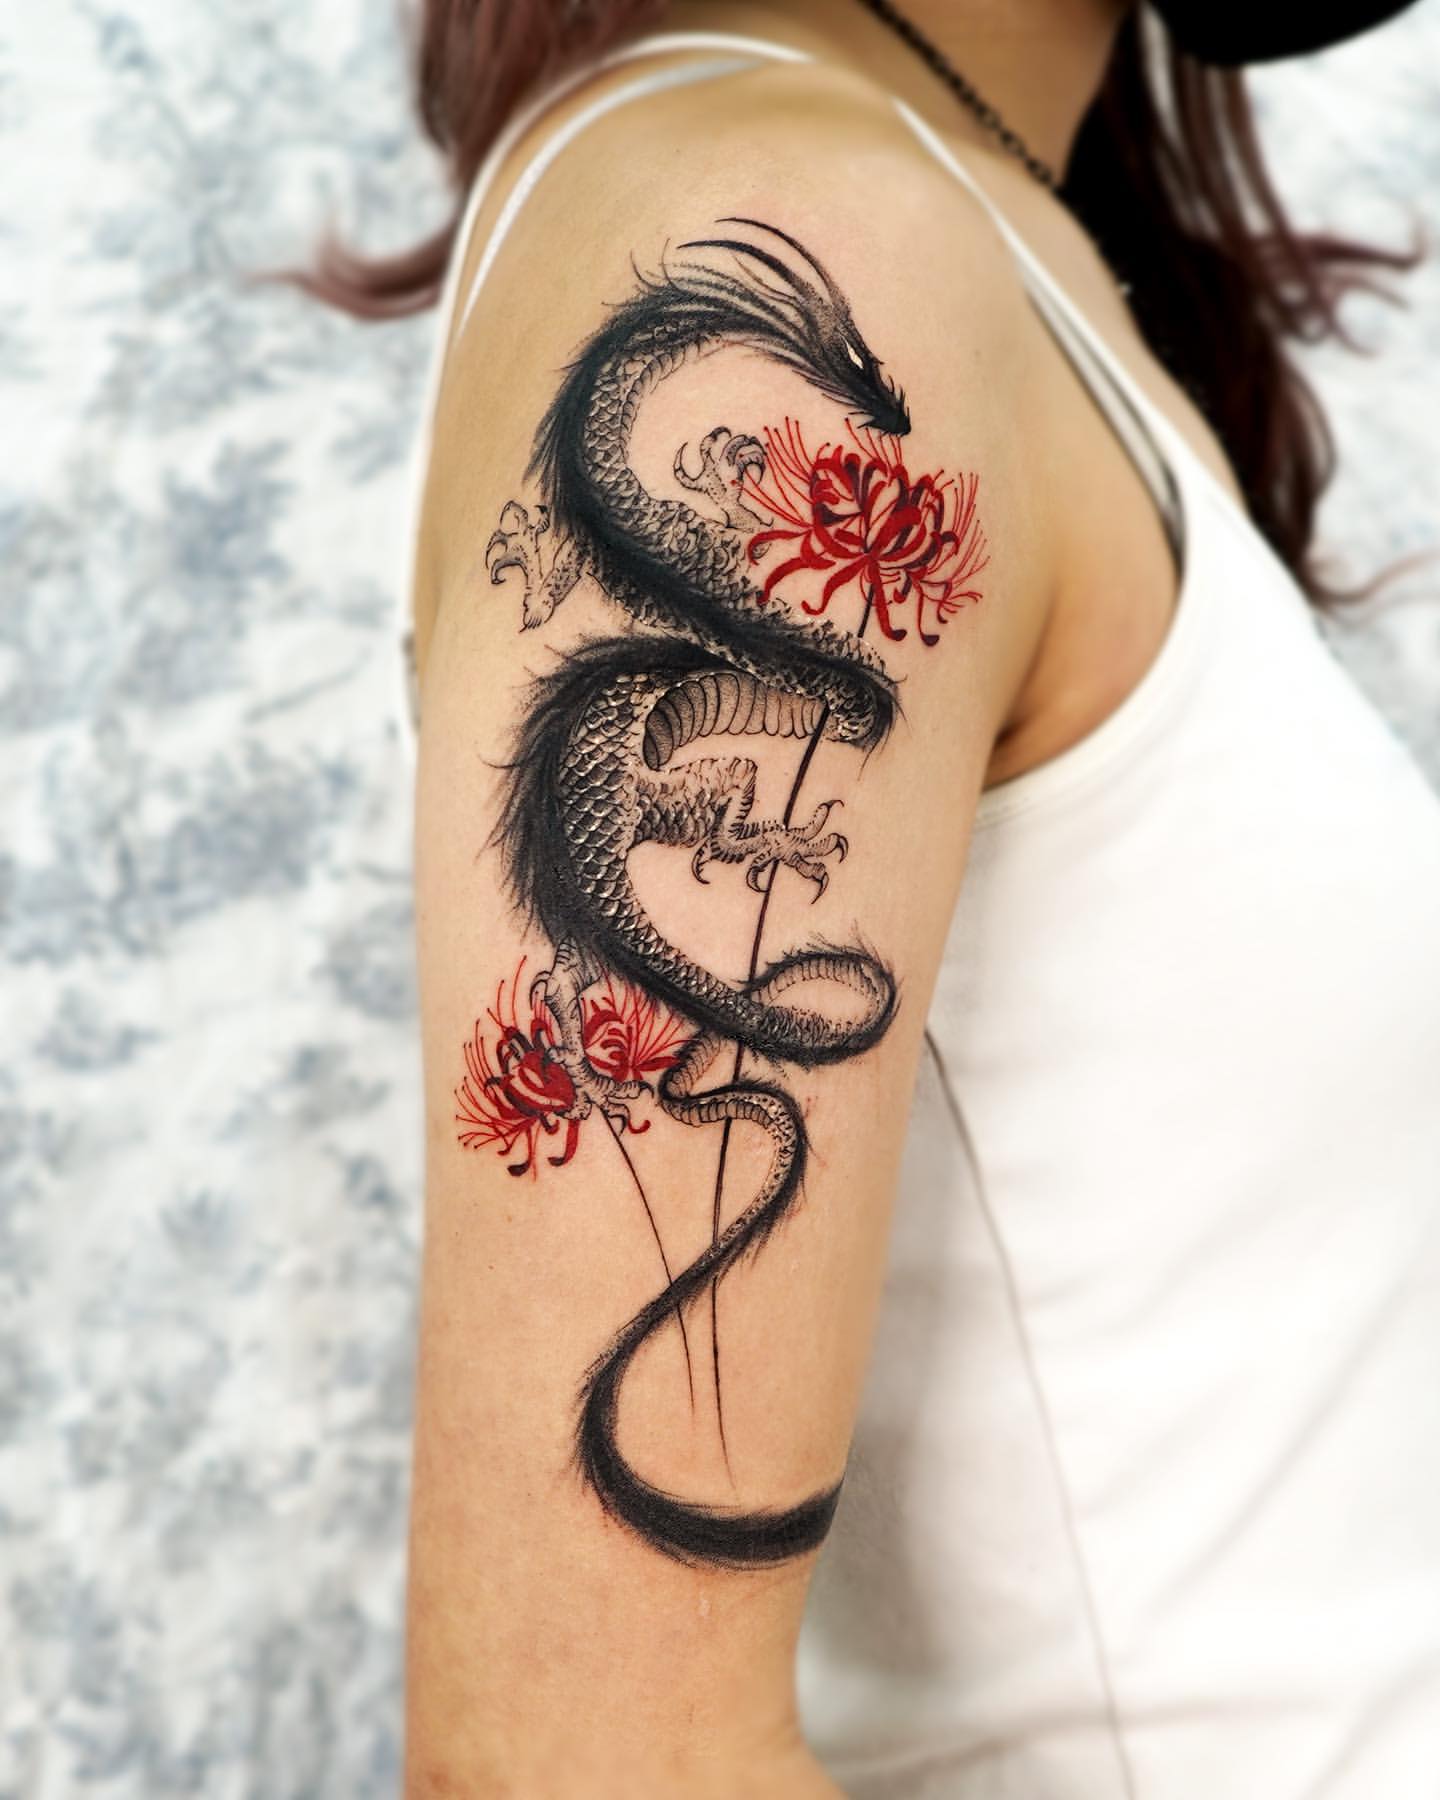 Spider Lily Tattoo Ideas 29